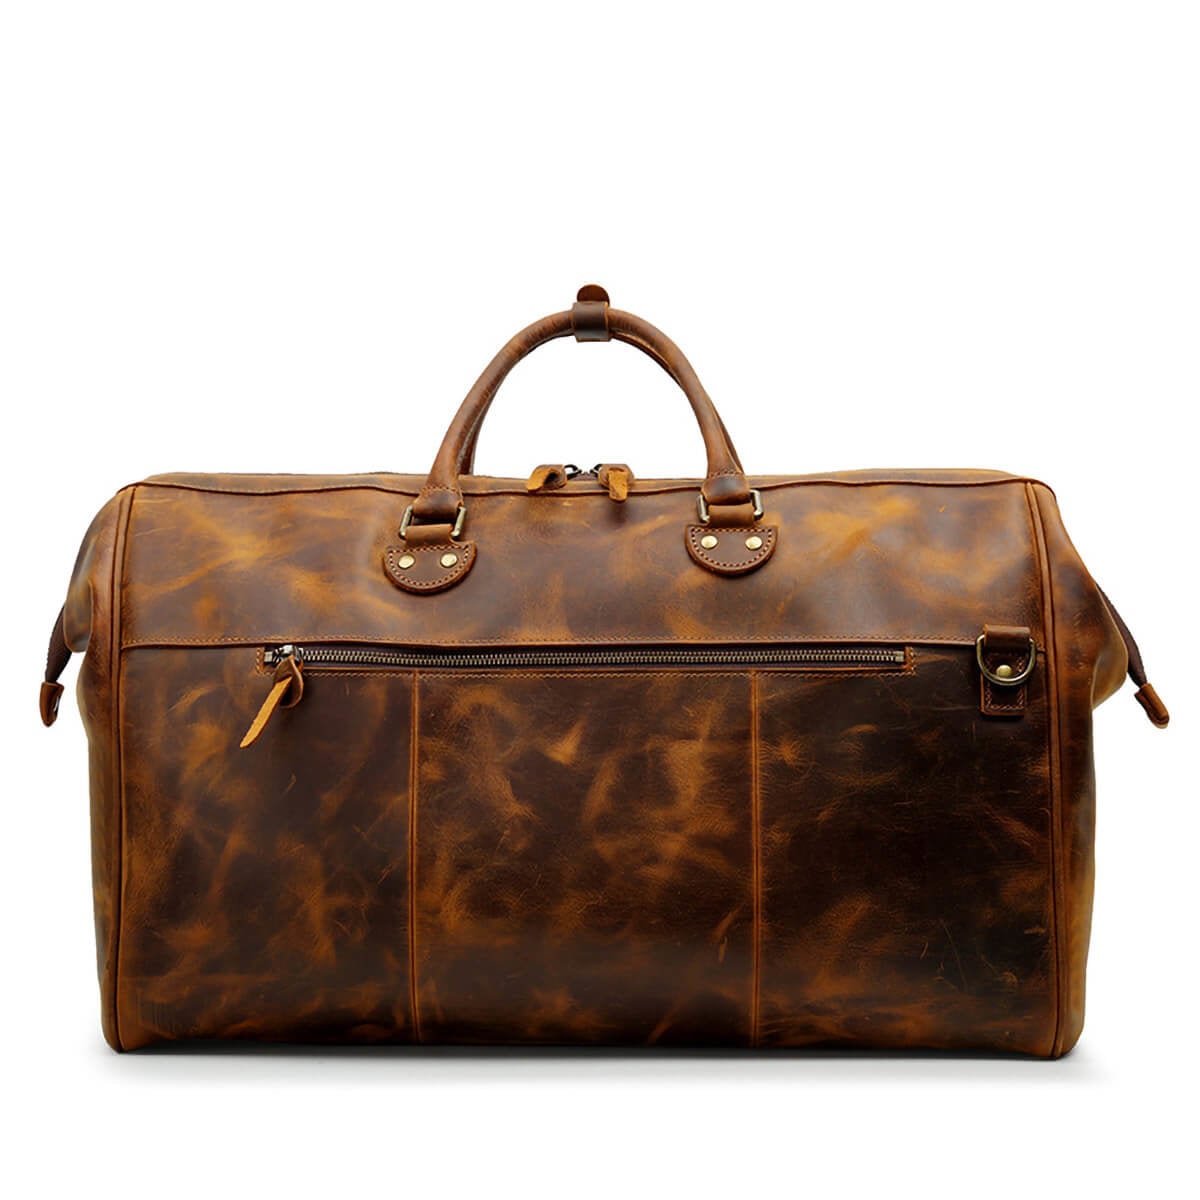 Genuine Leather Travel Luggage